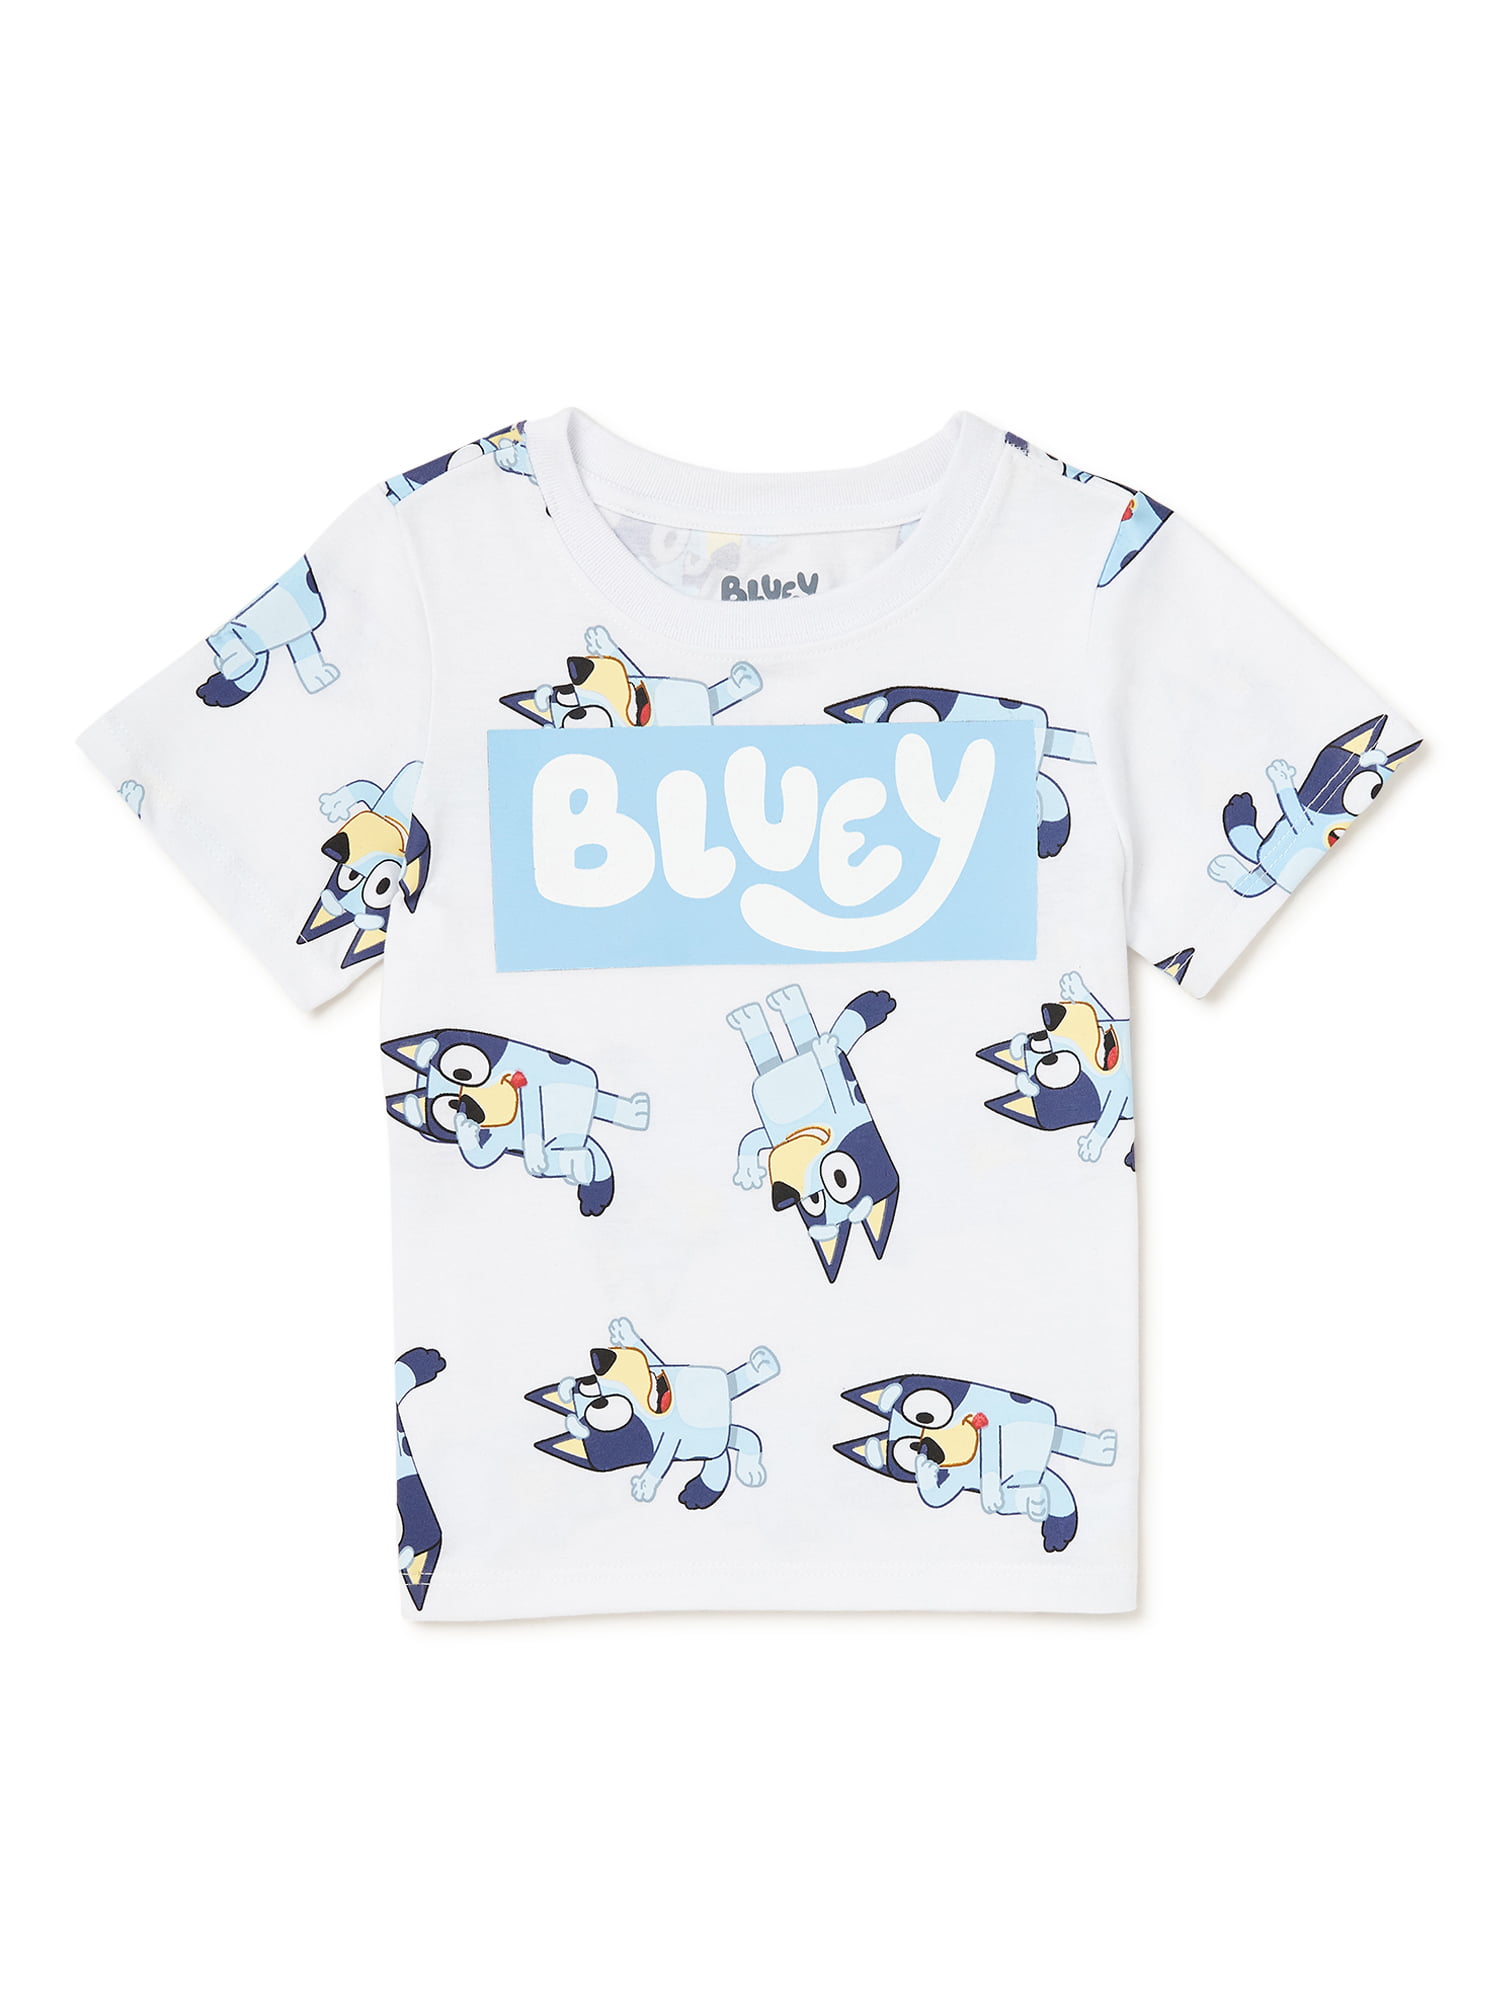 Fryhyu8 Baby Boys Kids Drummer Printed Long Sleeve Cotton Infants T-Shirts